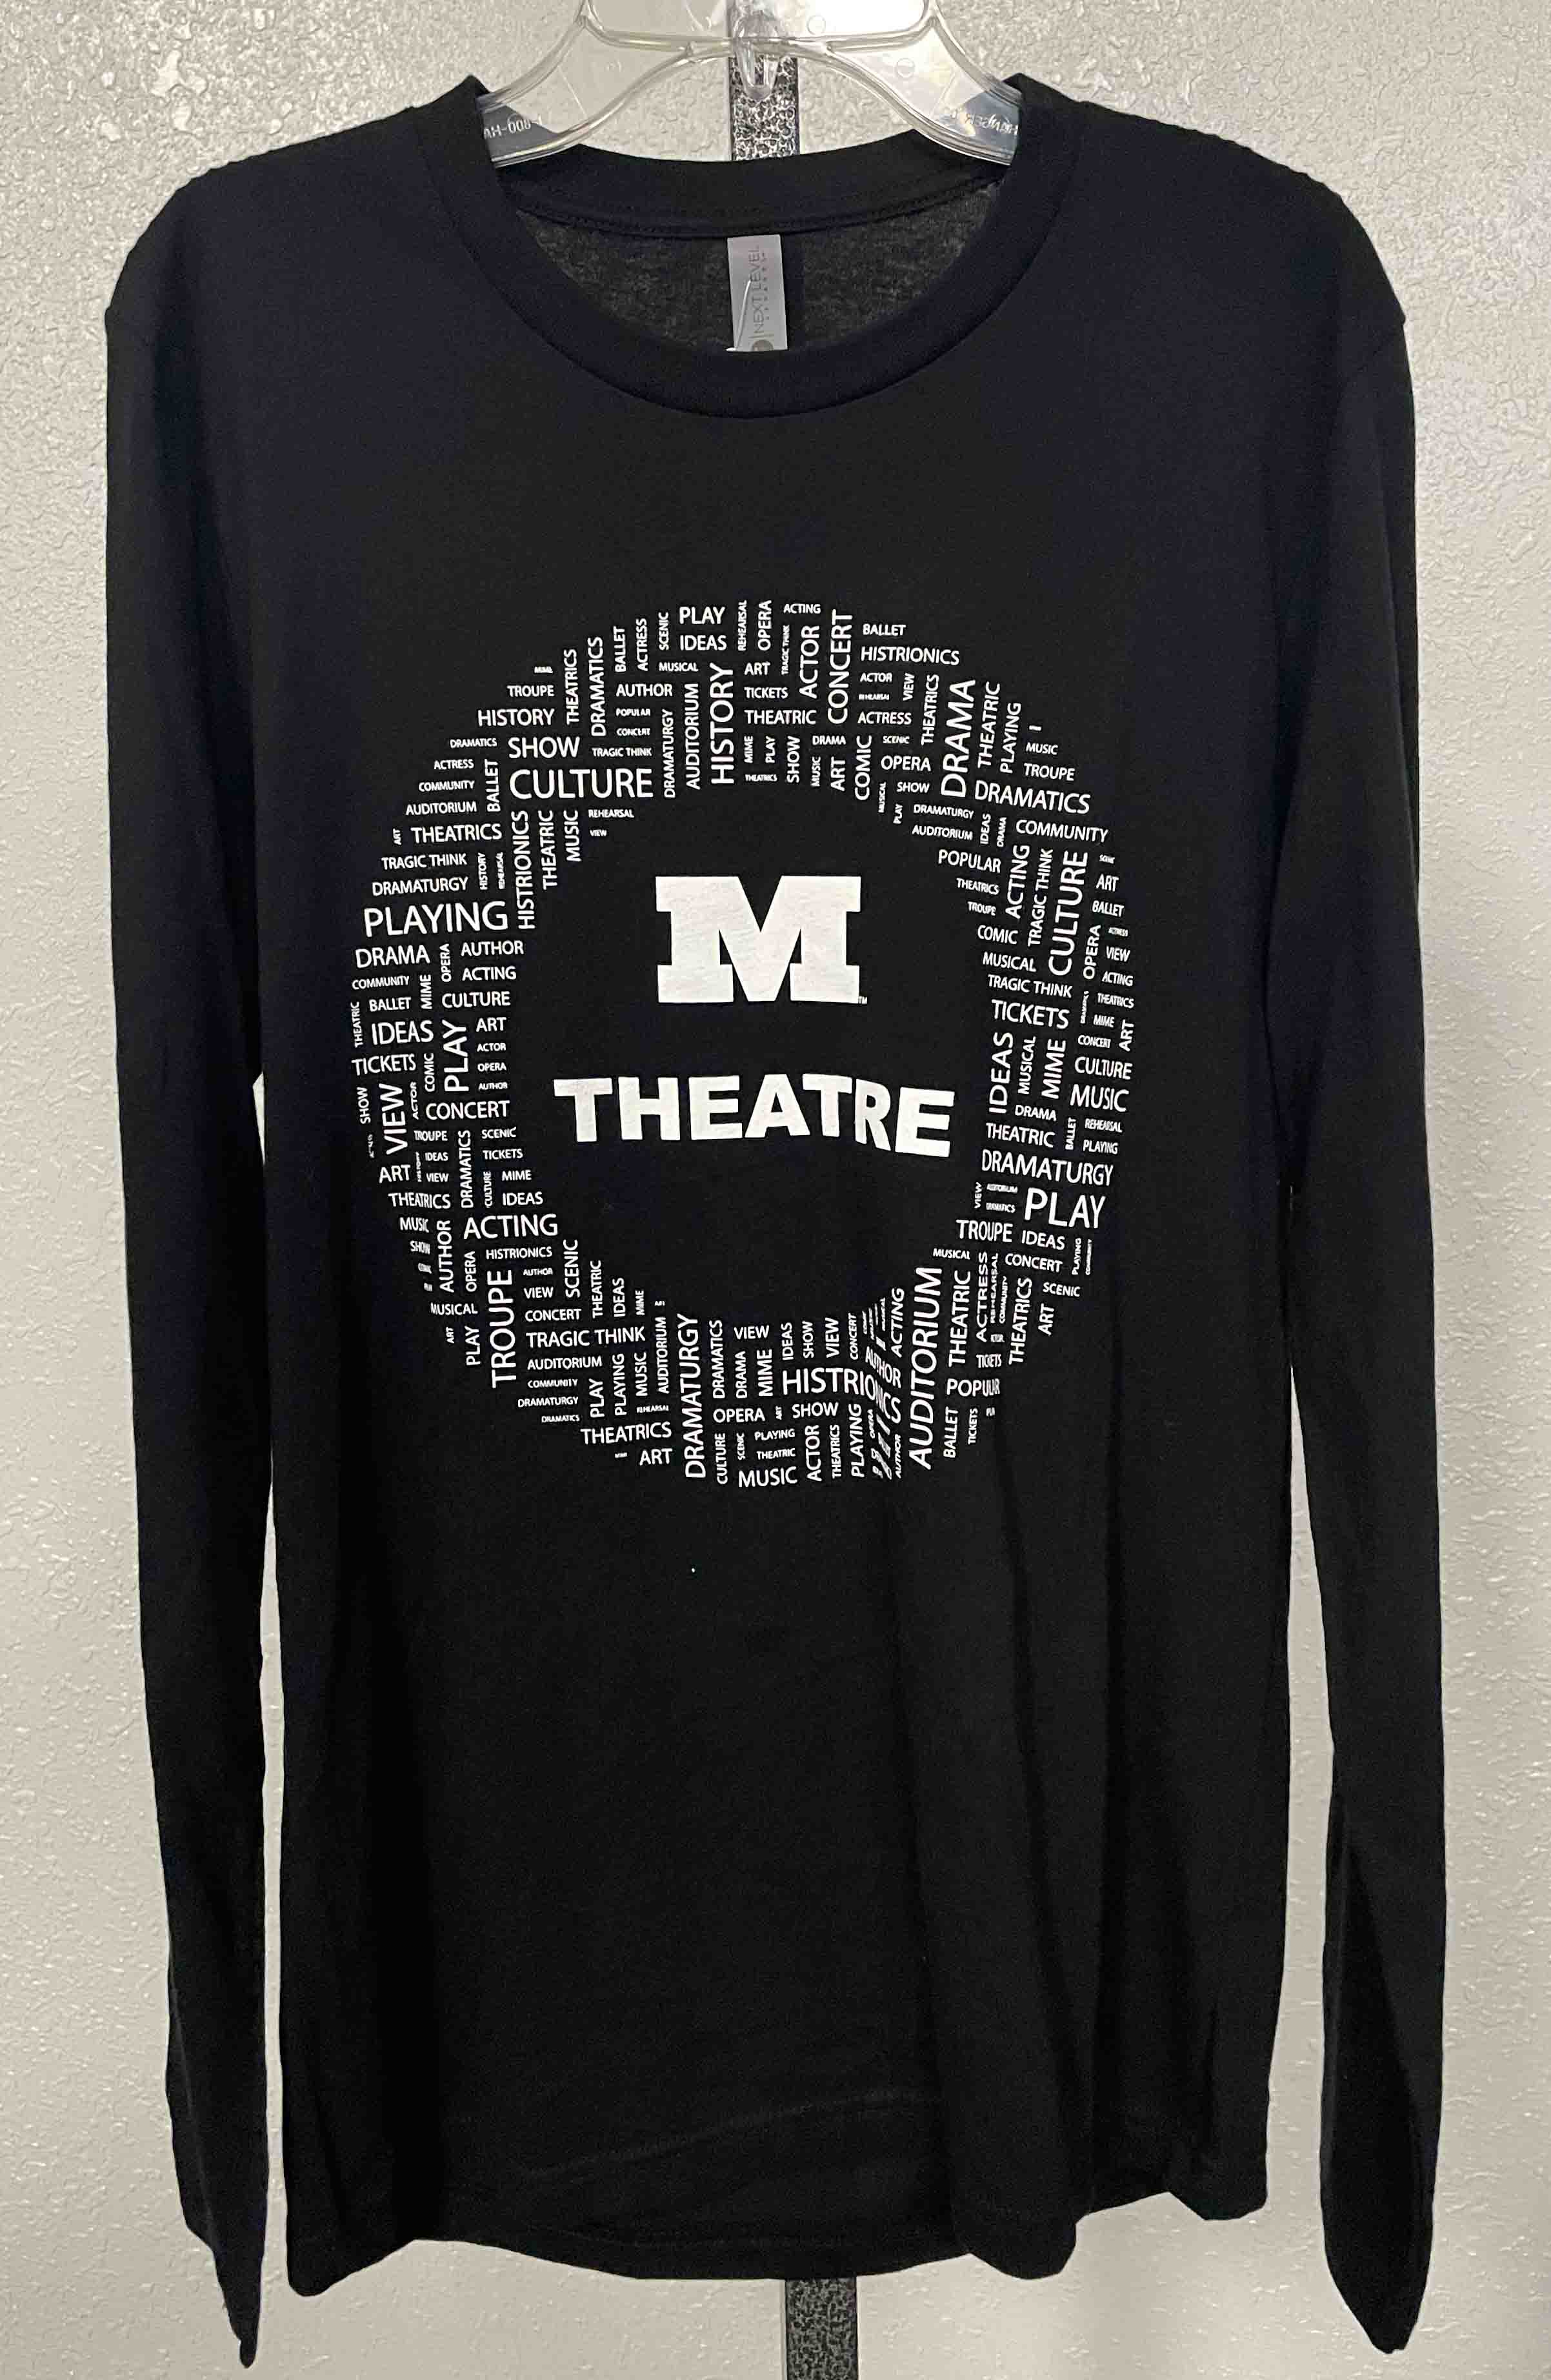 Millikin Theater Shirt